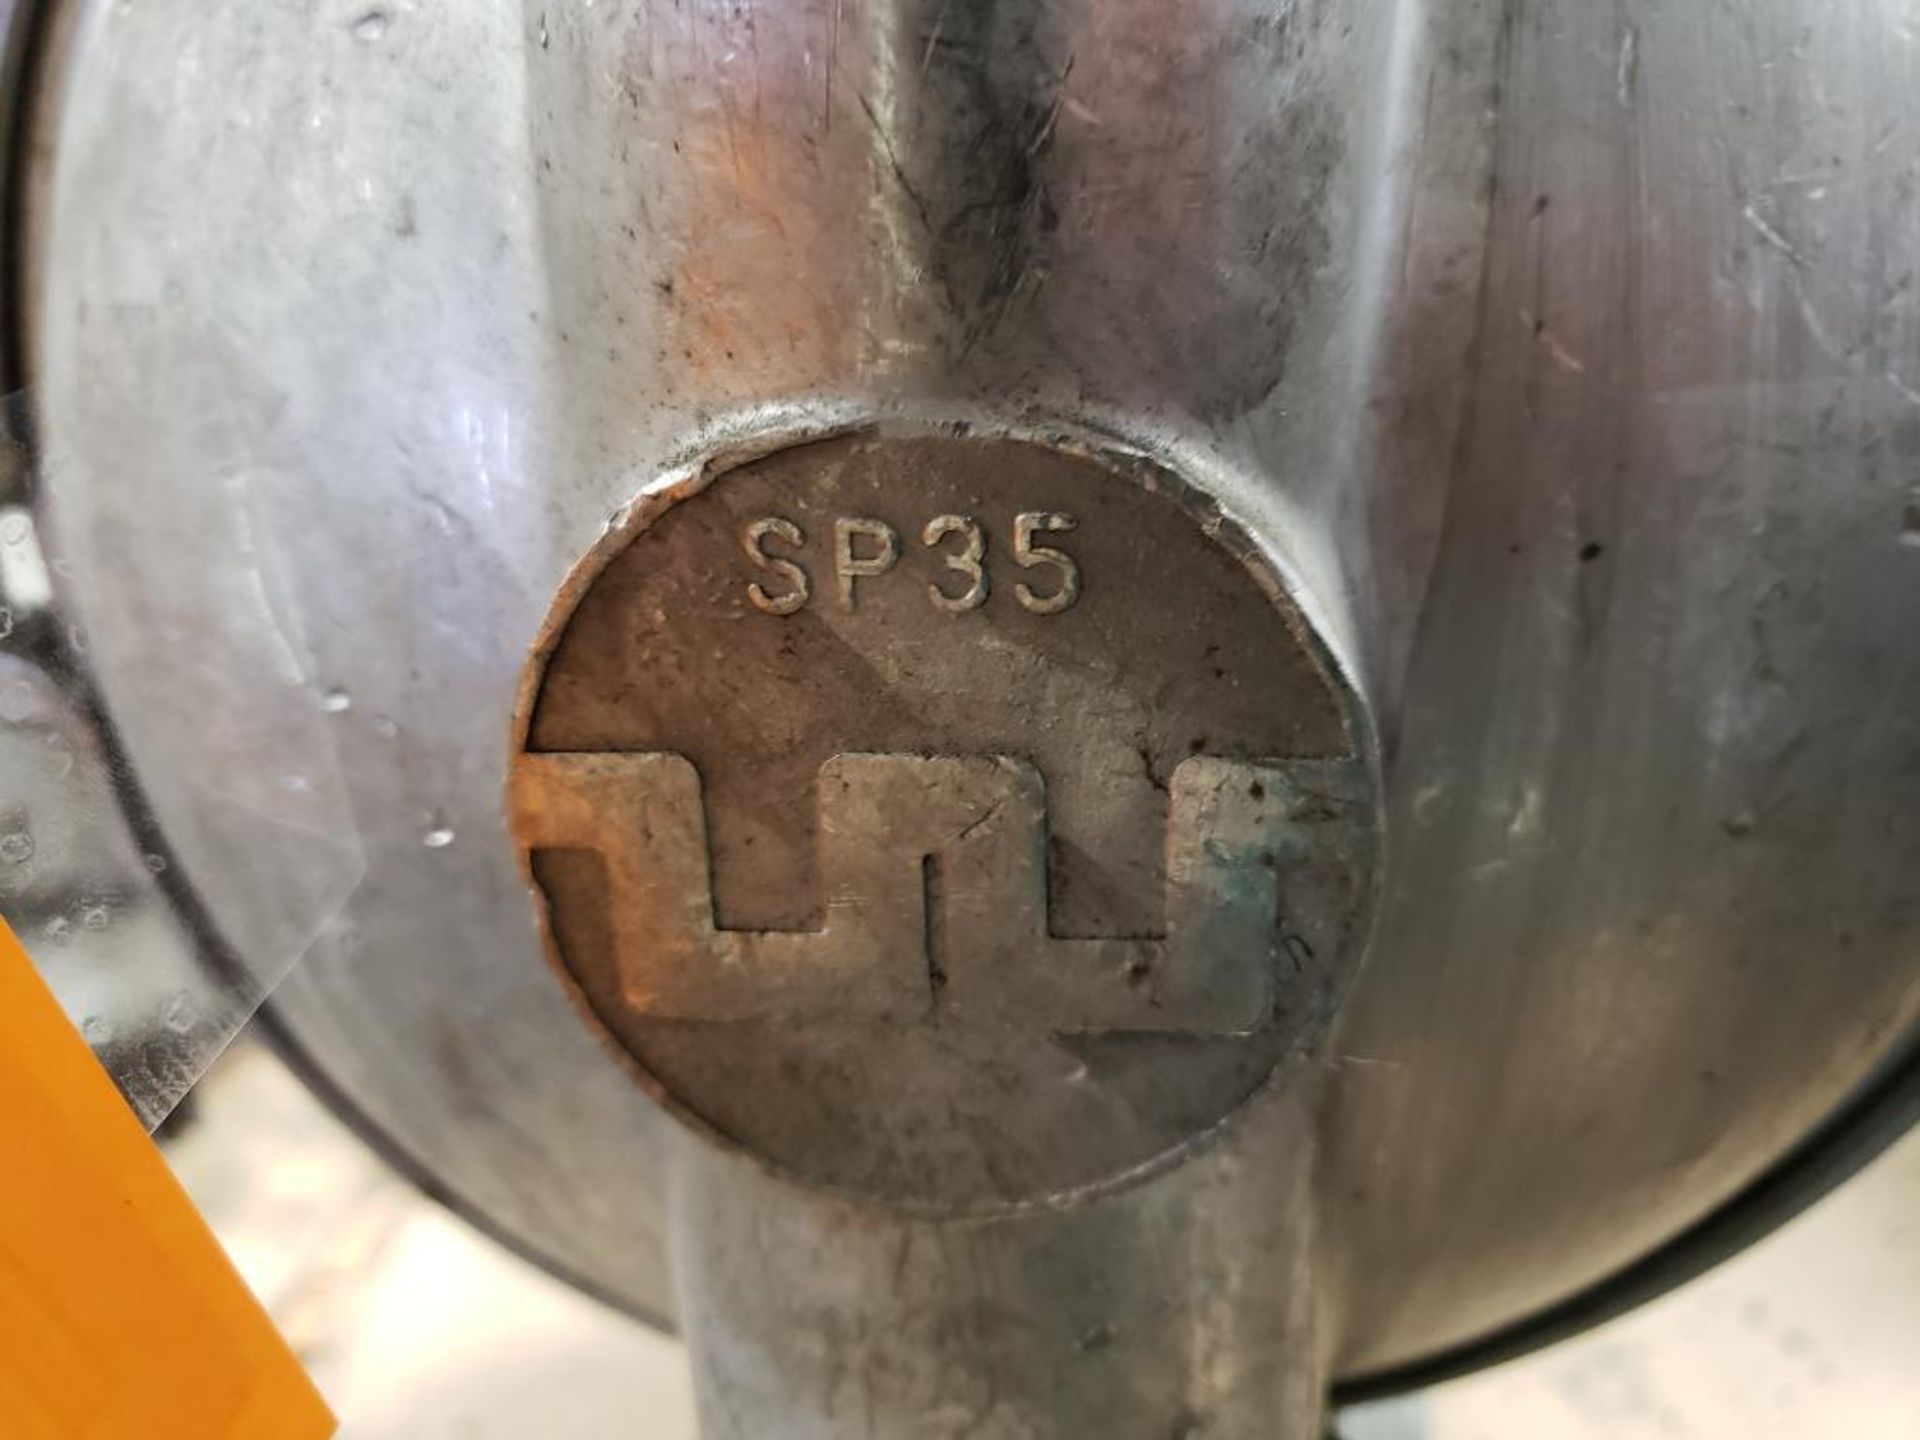 Wilden Stainless steel diaphragm pump. Model SP35. - Image 3 of 4